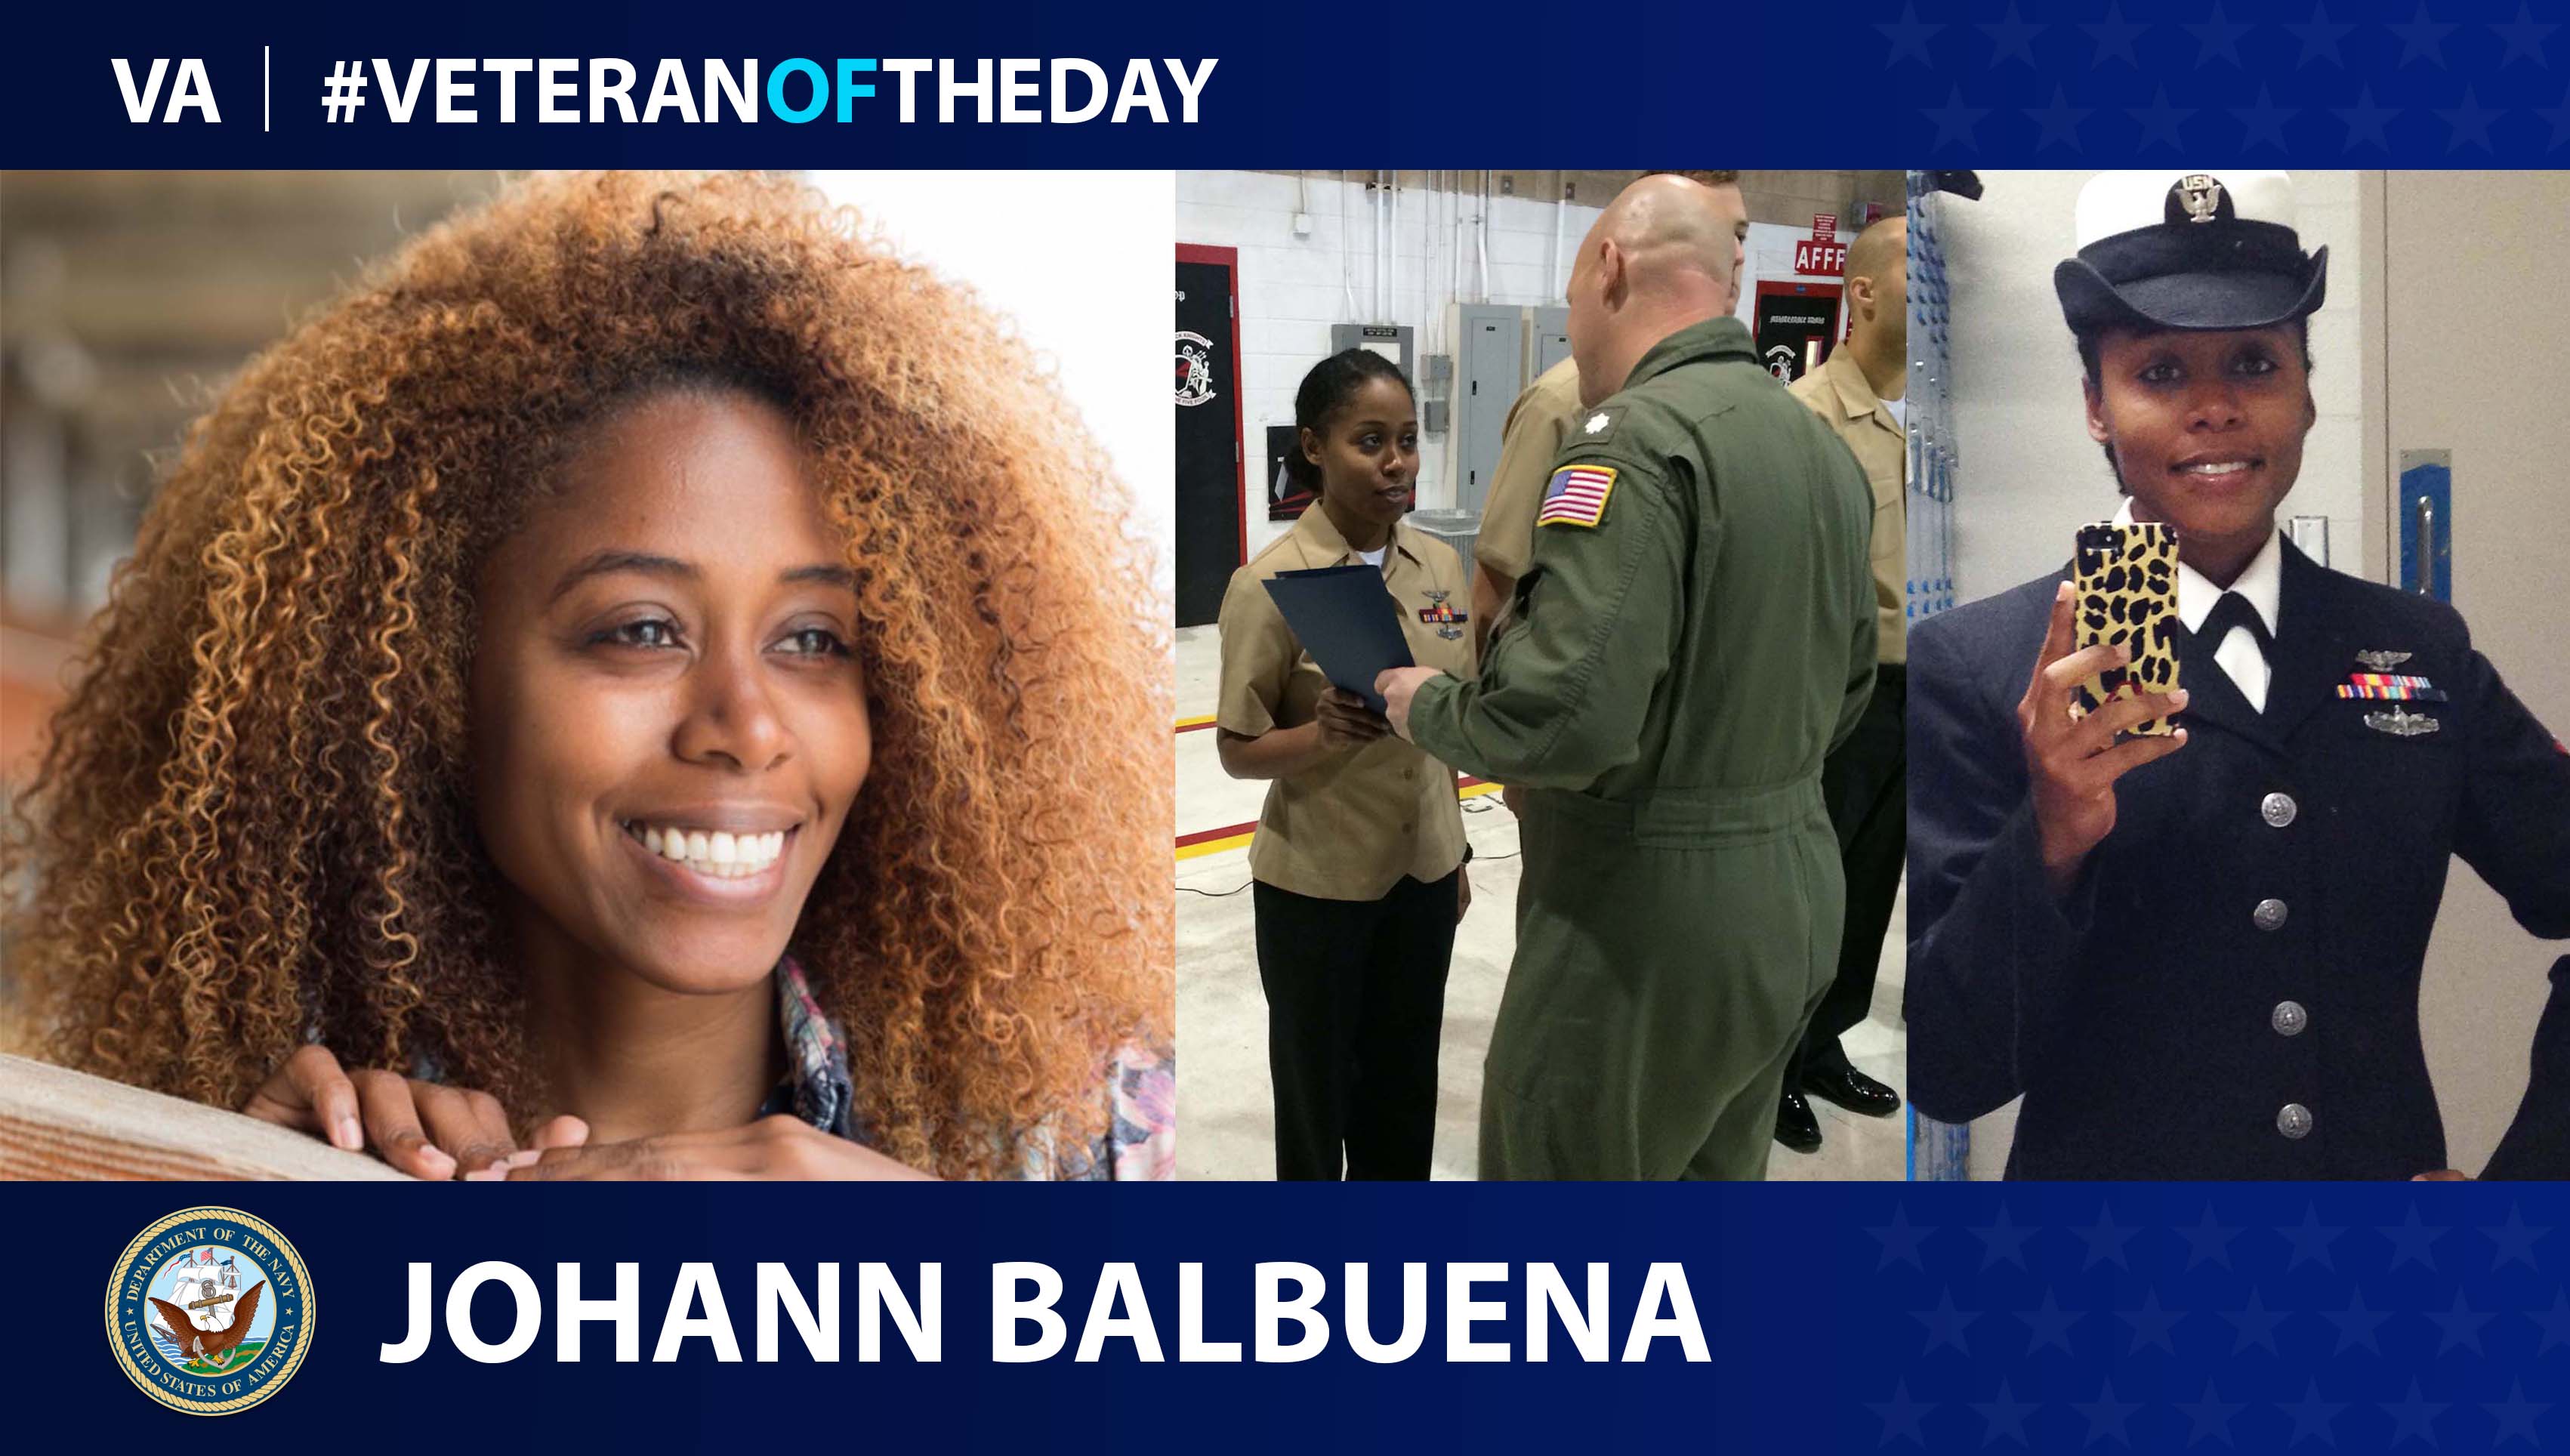 Navy Veteran Johann Balbuena is today's Veteran of the Day.